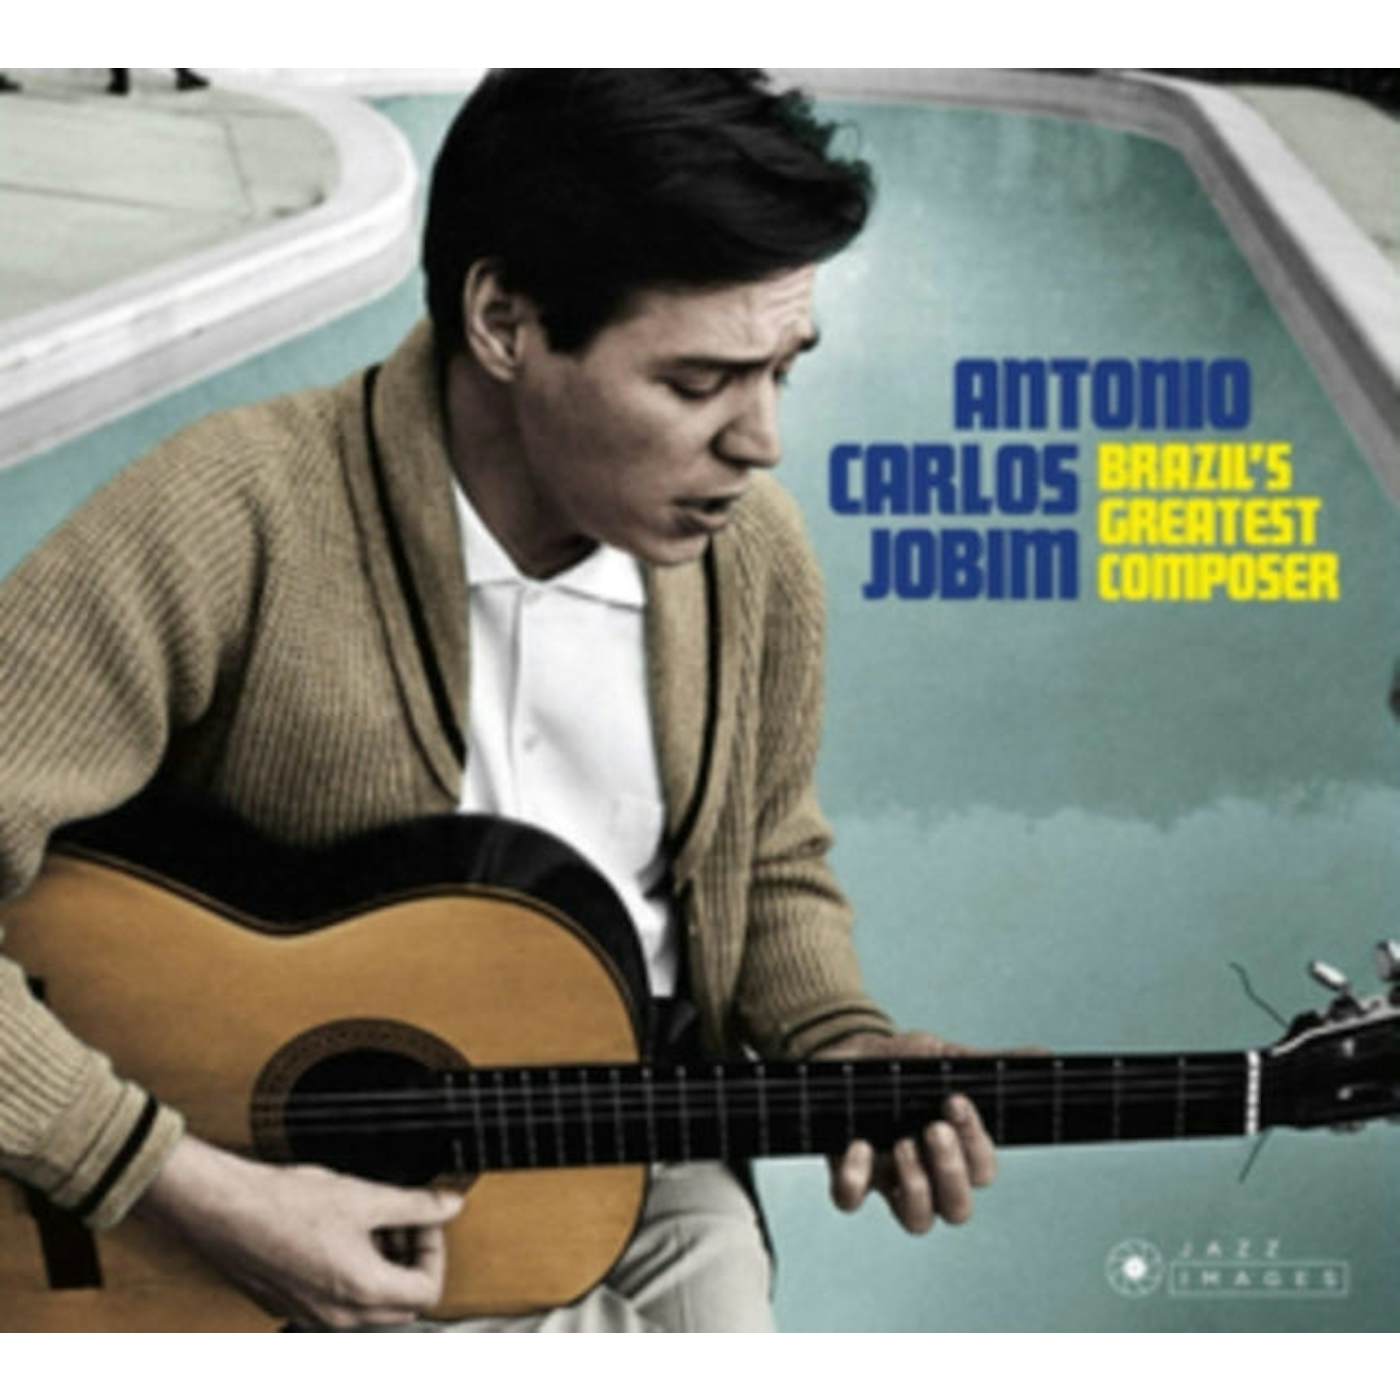 Antônio Carlos Jobim CD - Brazil's Greatest Composer